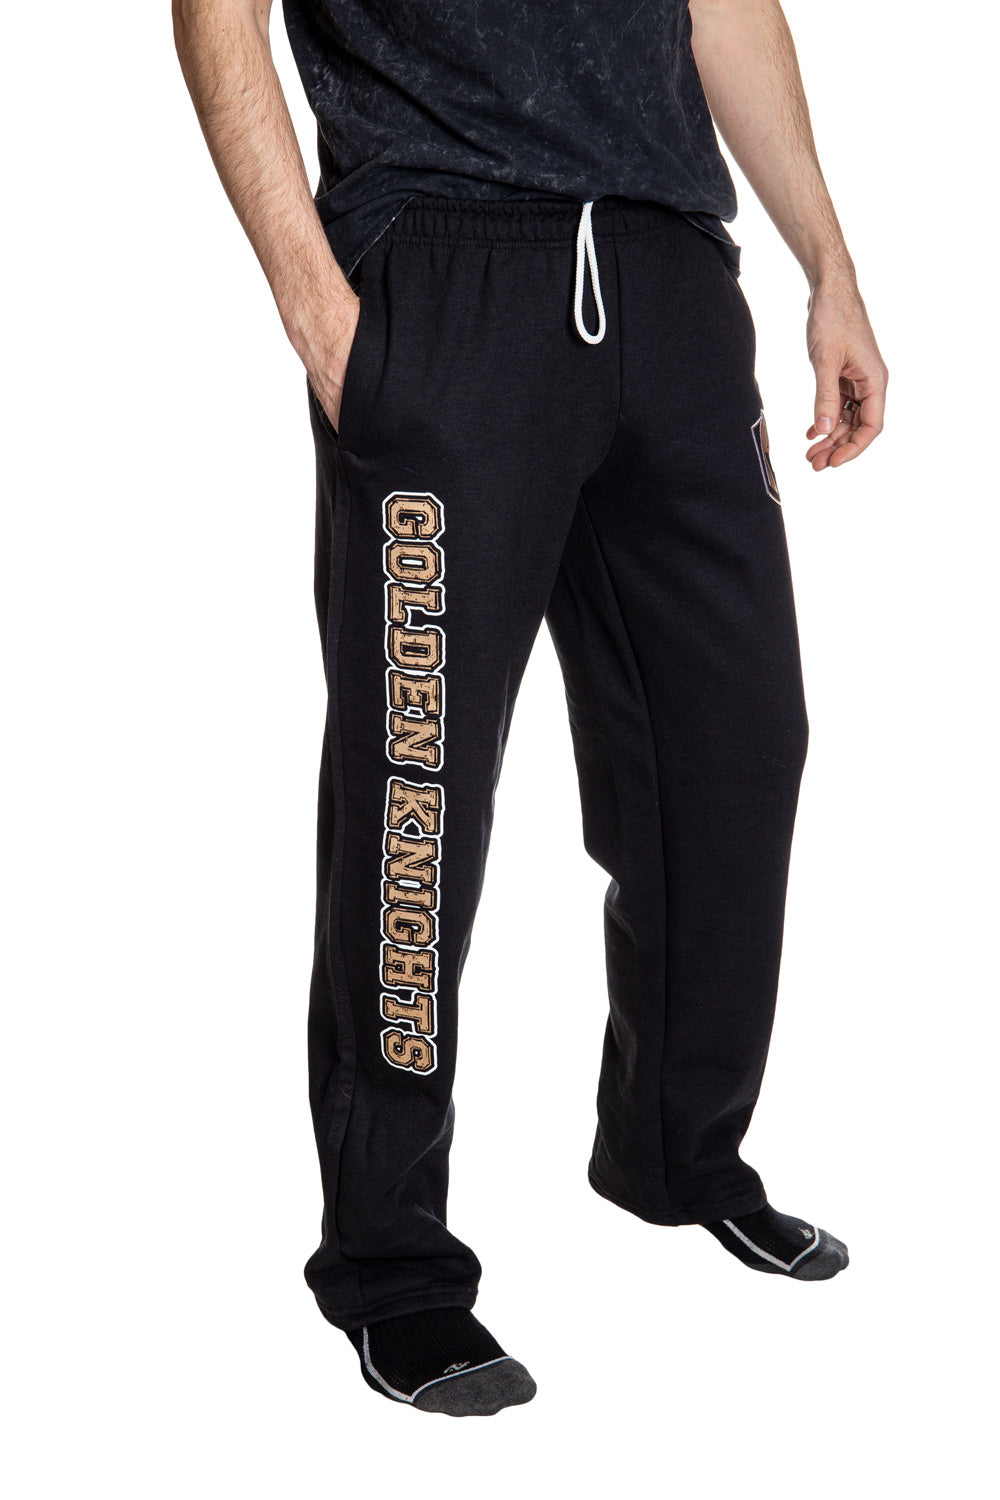 Vegas Golden Knights Premium Fleece Sweatpants Side View of Golden Knights Print.